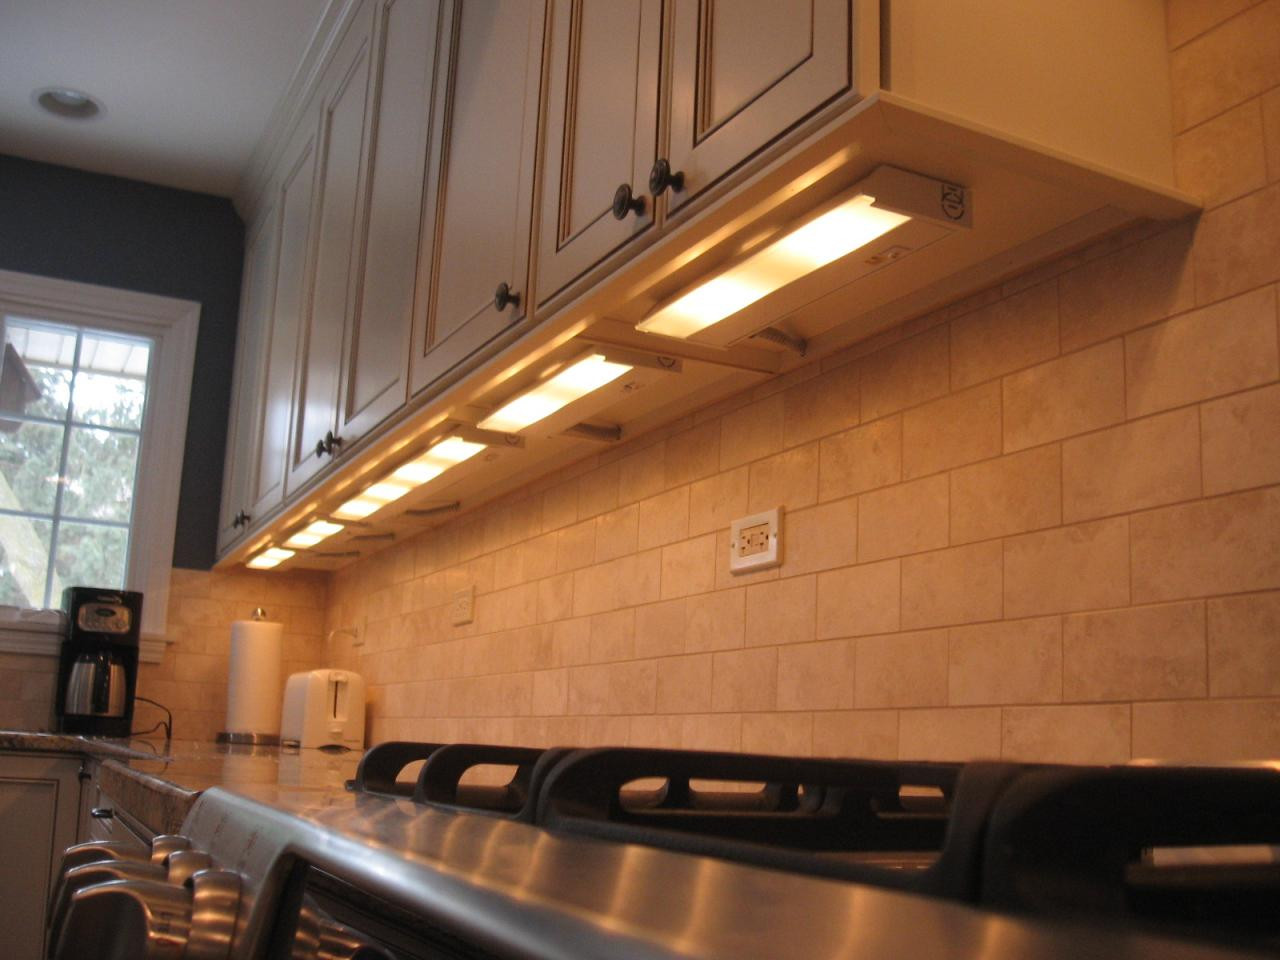 Under The Kitchen Cabinet Lighting
 lighting tip